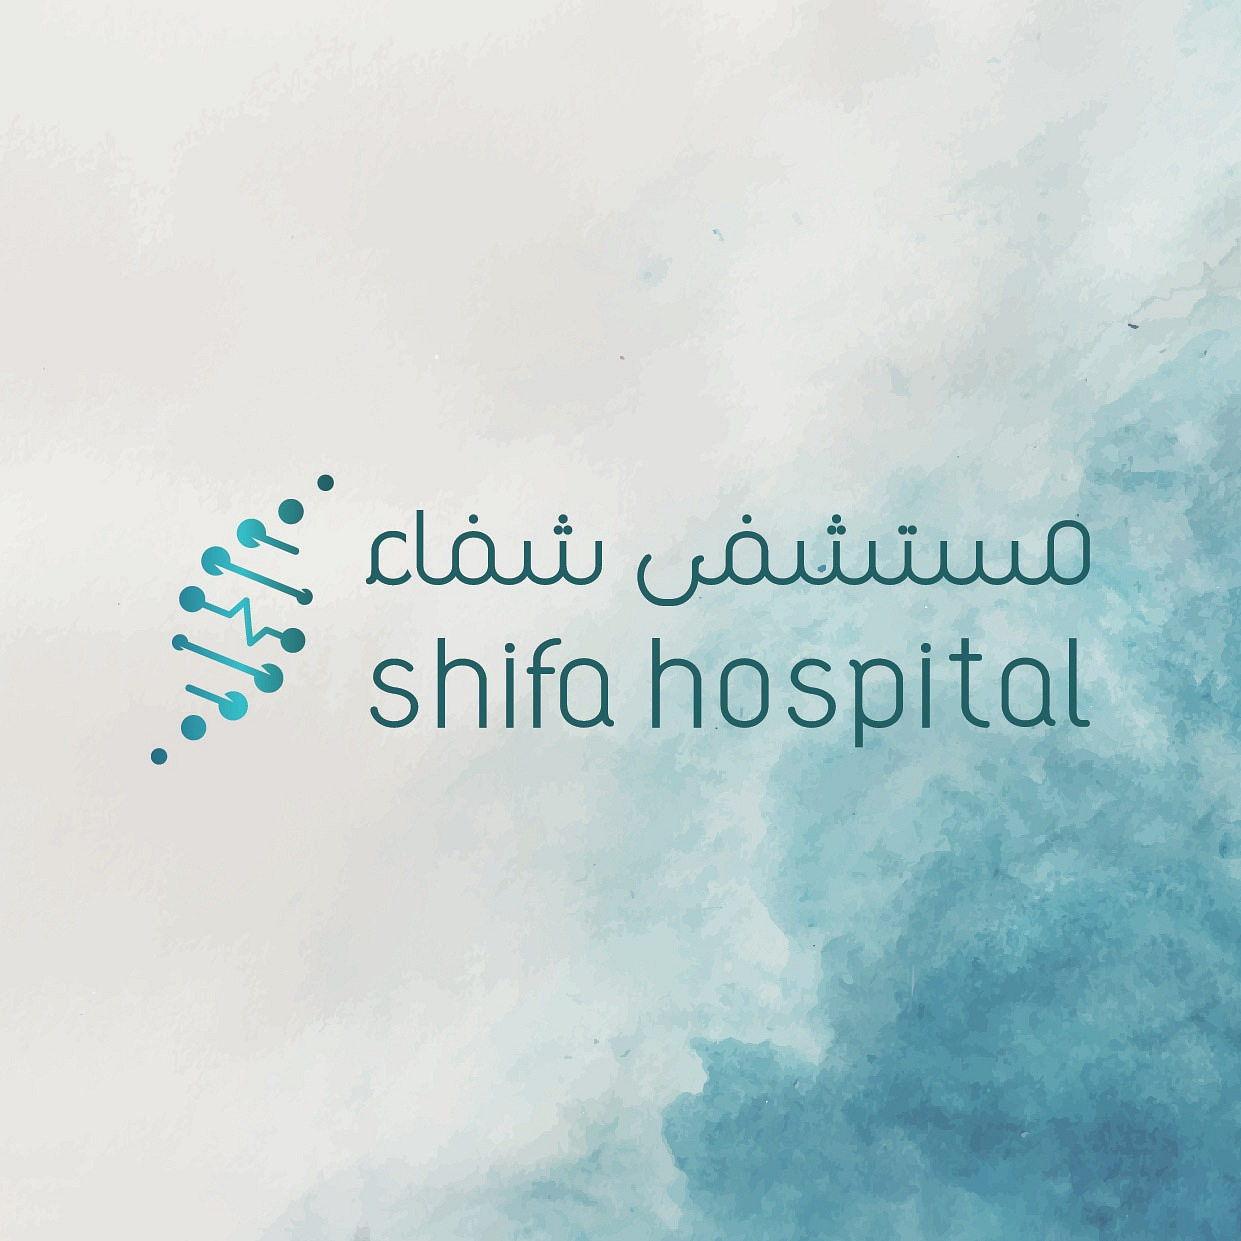 SHIFA HOSPITAL DESIGN